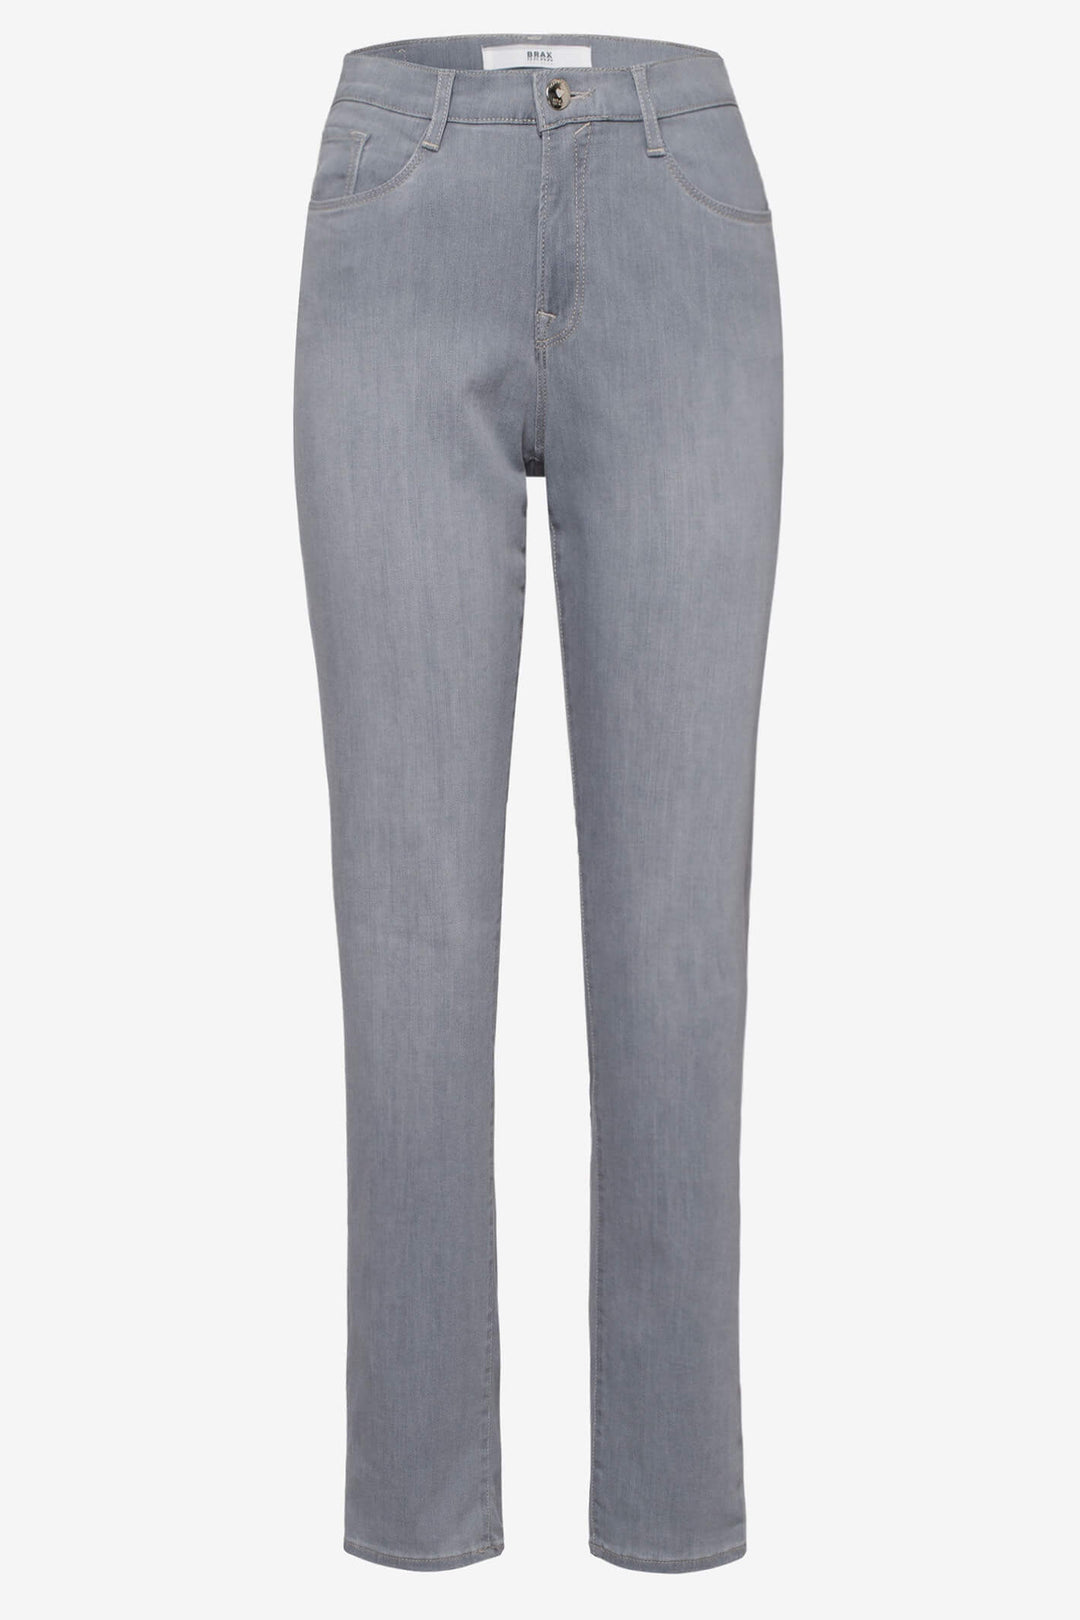 Brax Carola 74-400707 Blue Planet Grey Jeans - Shirley Allum Boutique